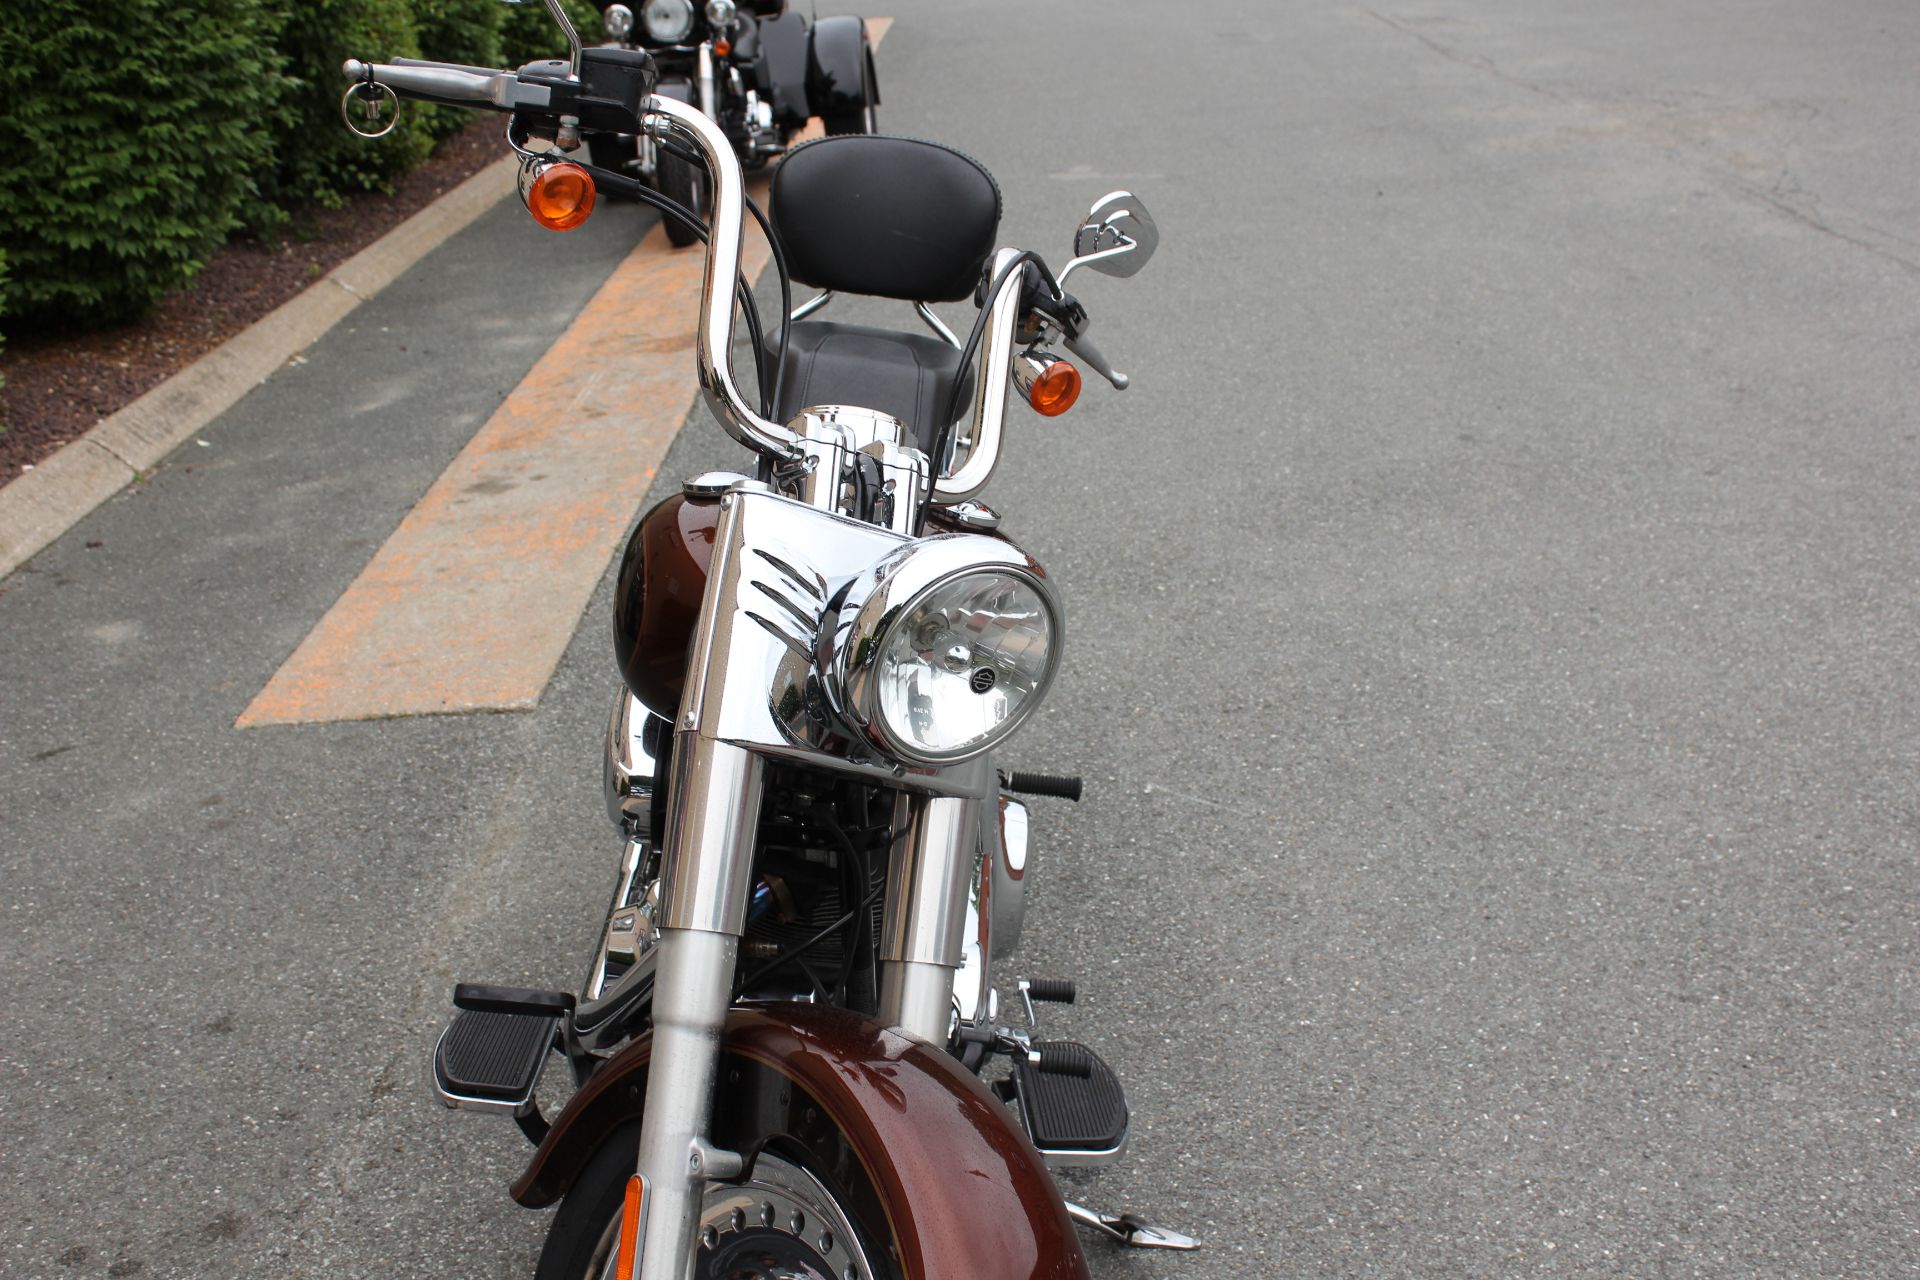 2009 Harley-Davidson Softail® Fat Boy® in Pittsfield, Massachusetts - Photo 13